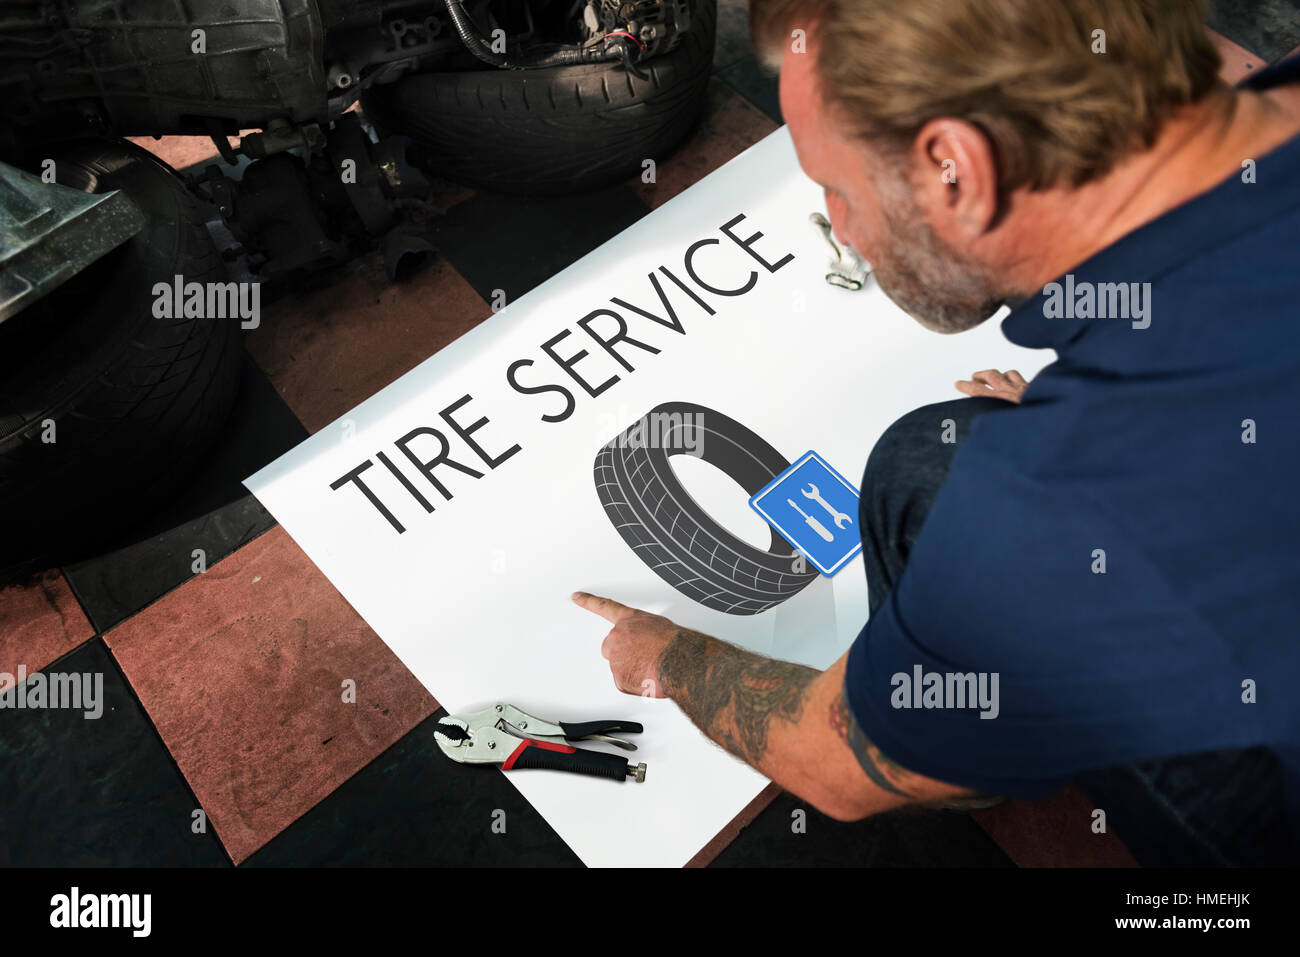 Tire Service Wheel Website Concept Stock Photo